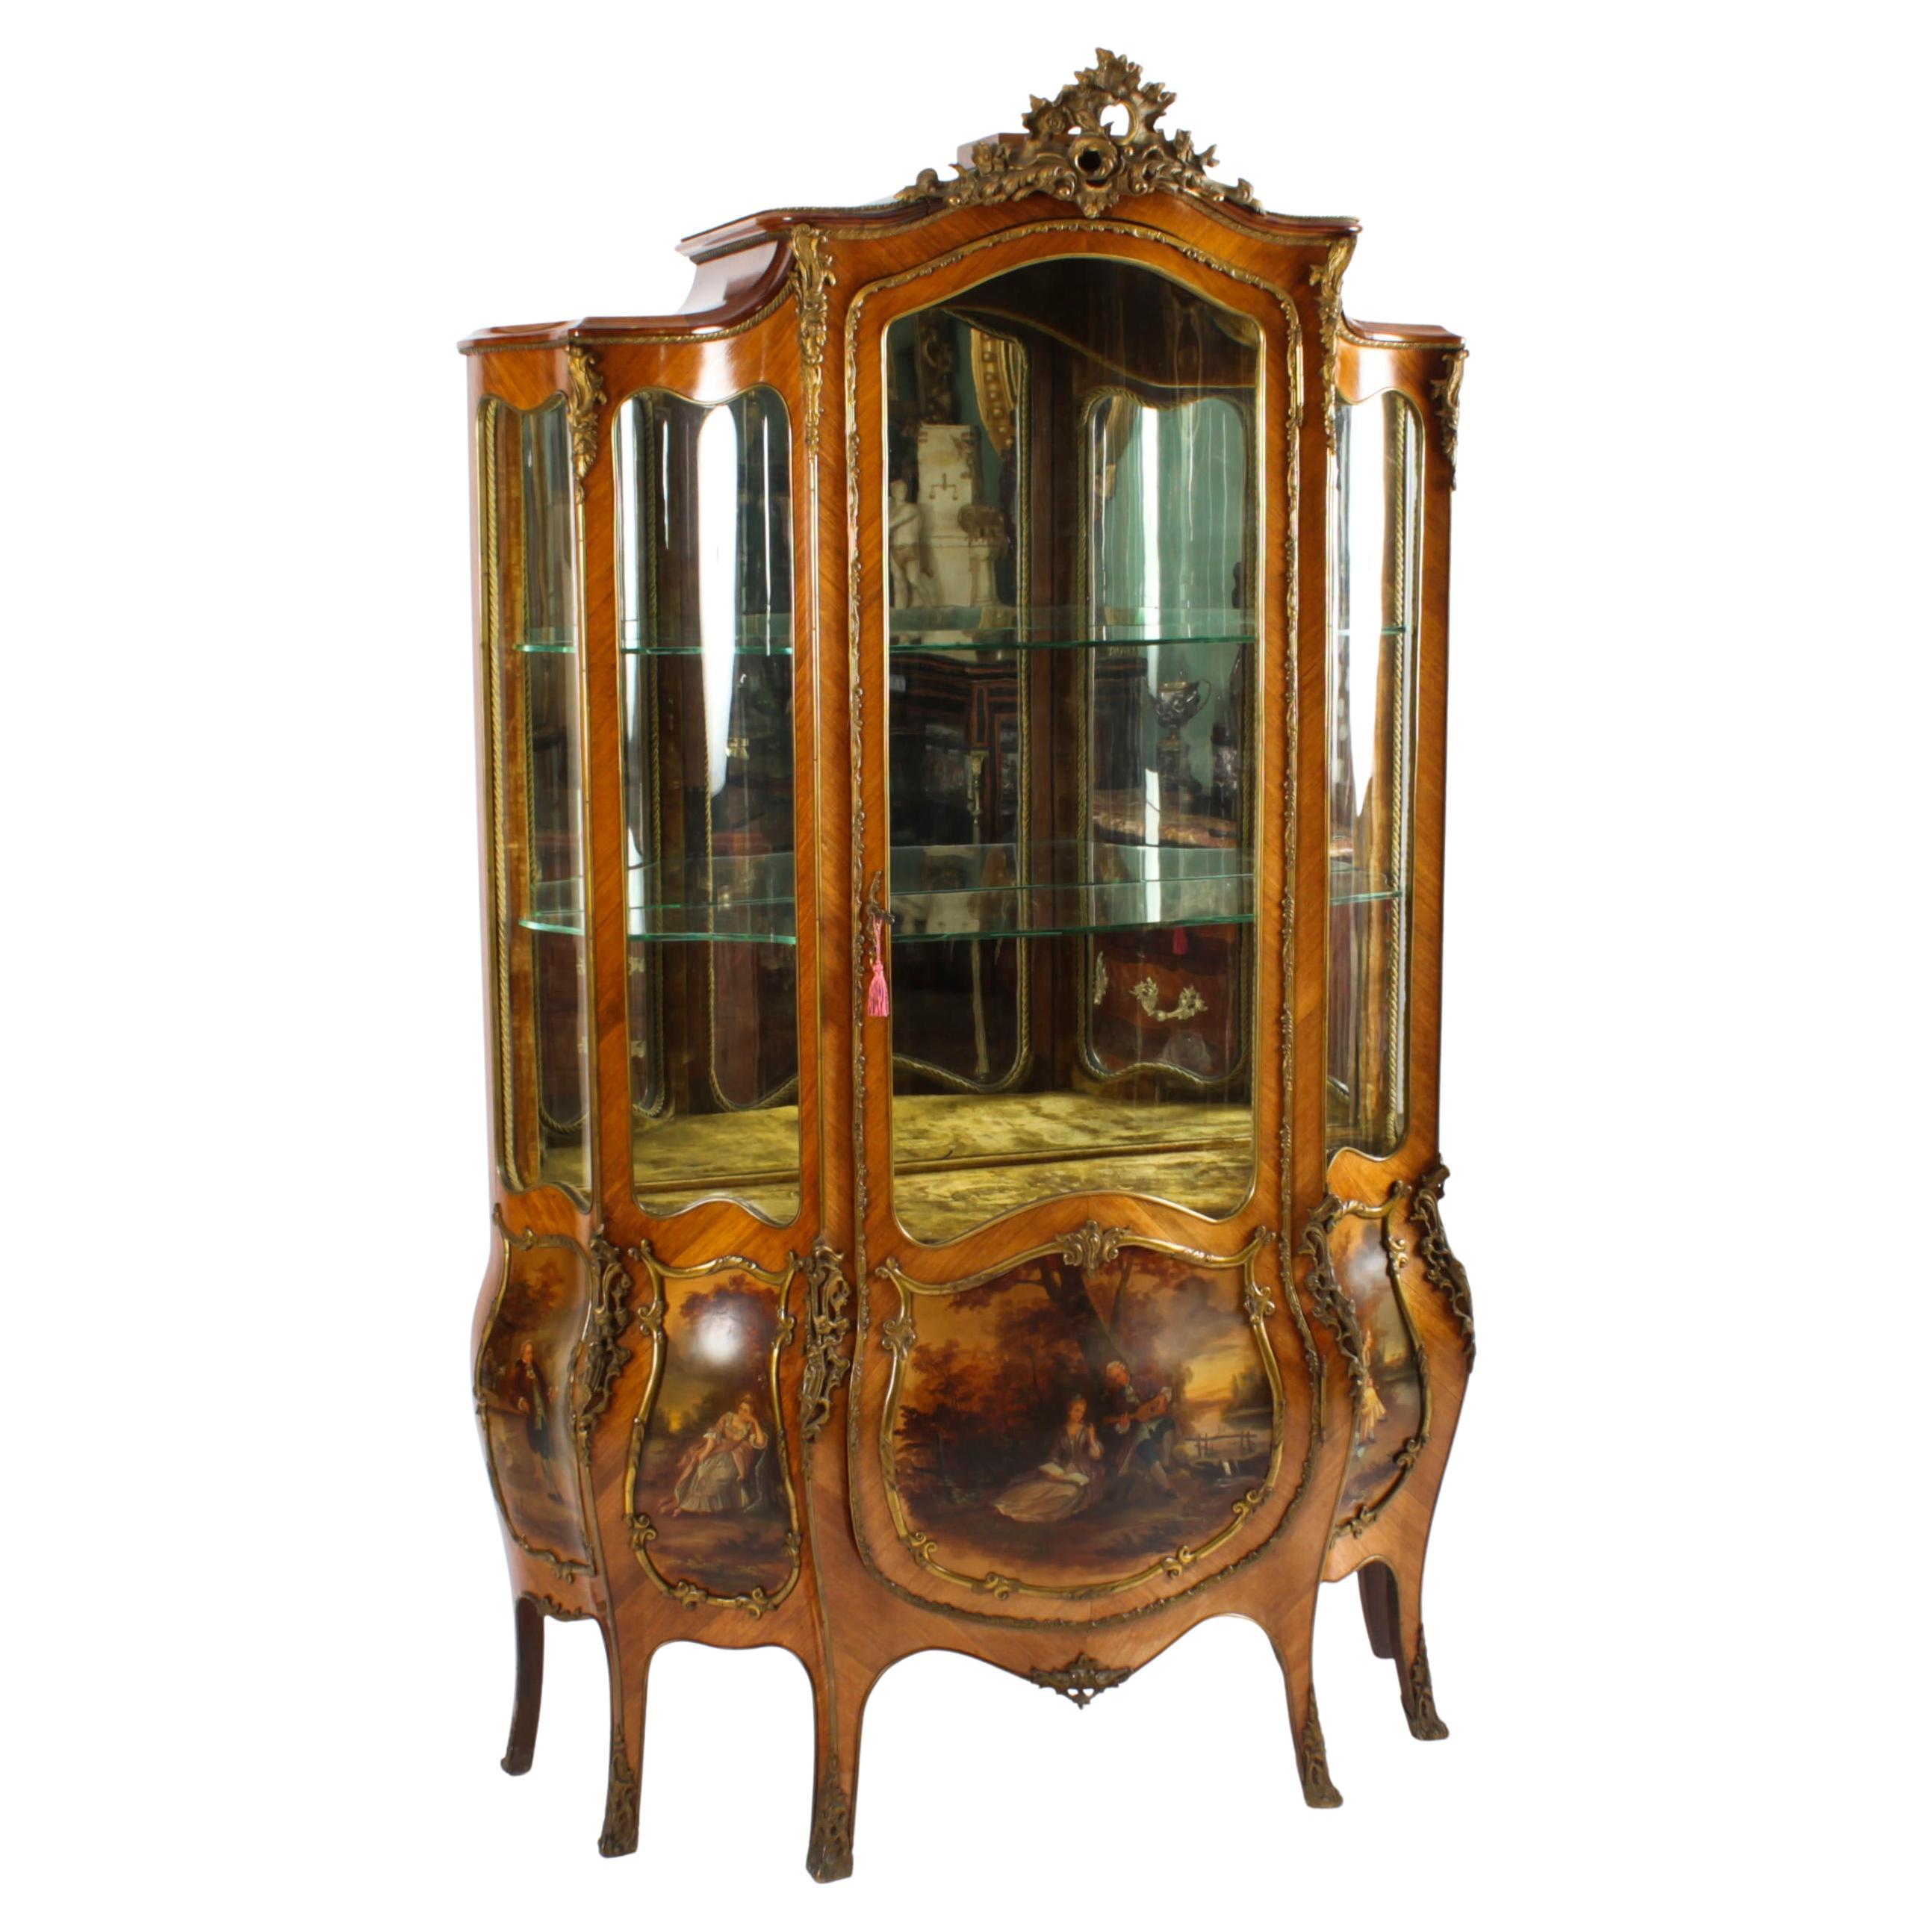 Antique Large Vernis Martin Bombe' Display Cabinet, 19th C